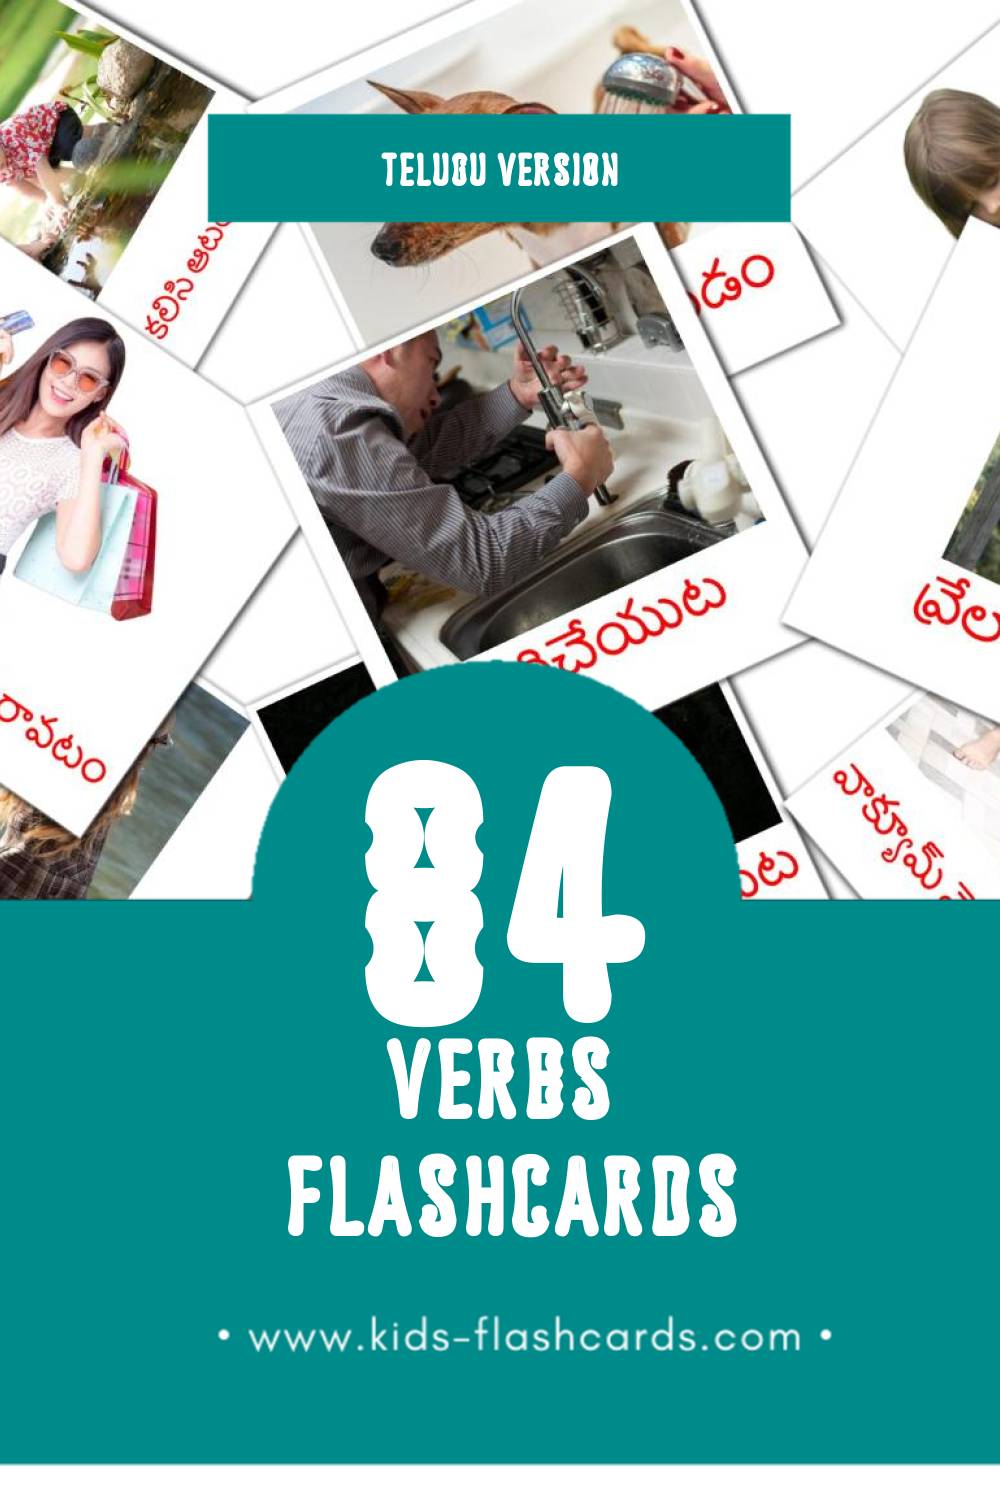 Visual క్రియలు  Flashcards for Toddlers (87 cards in Telugu)